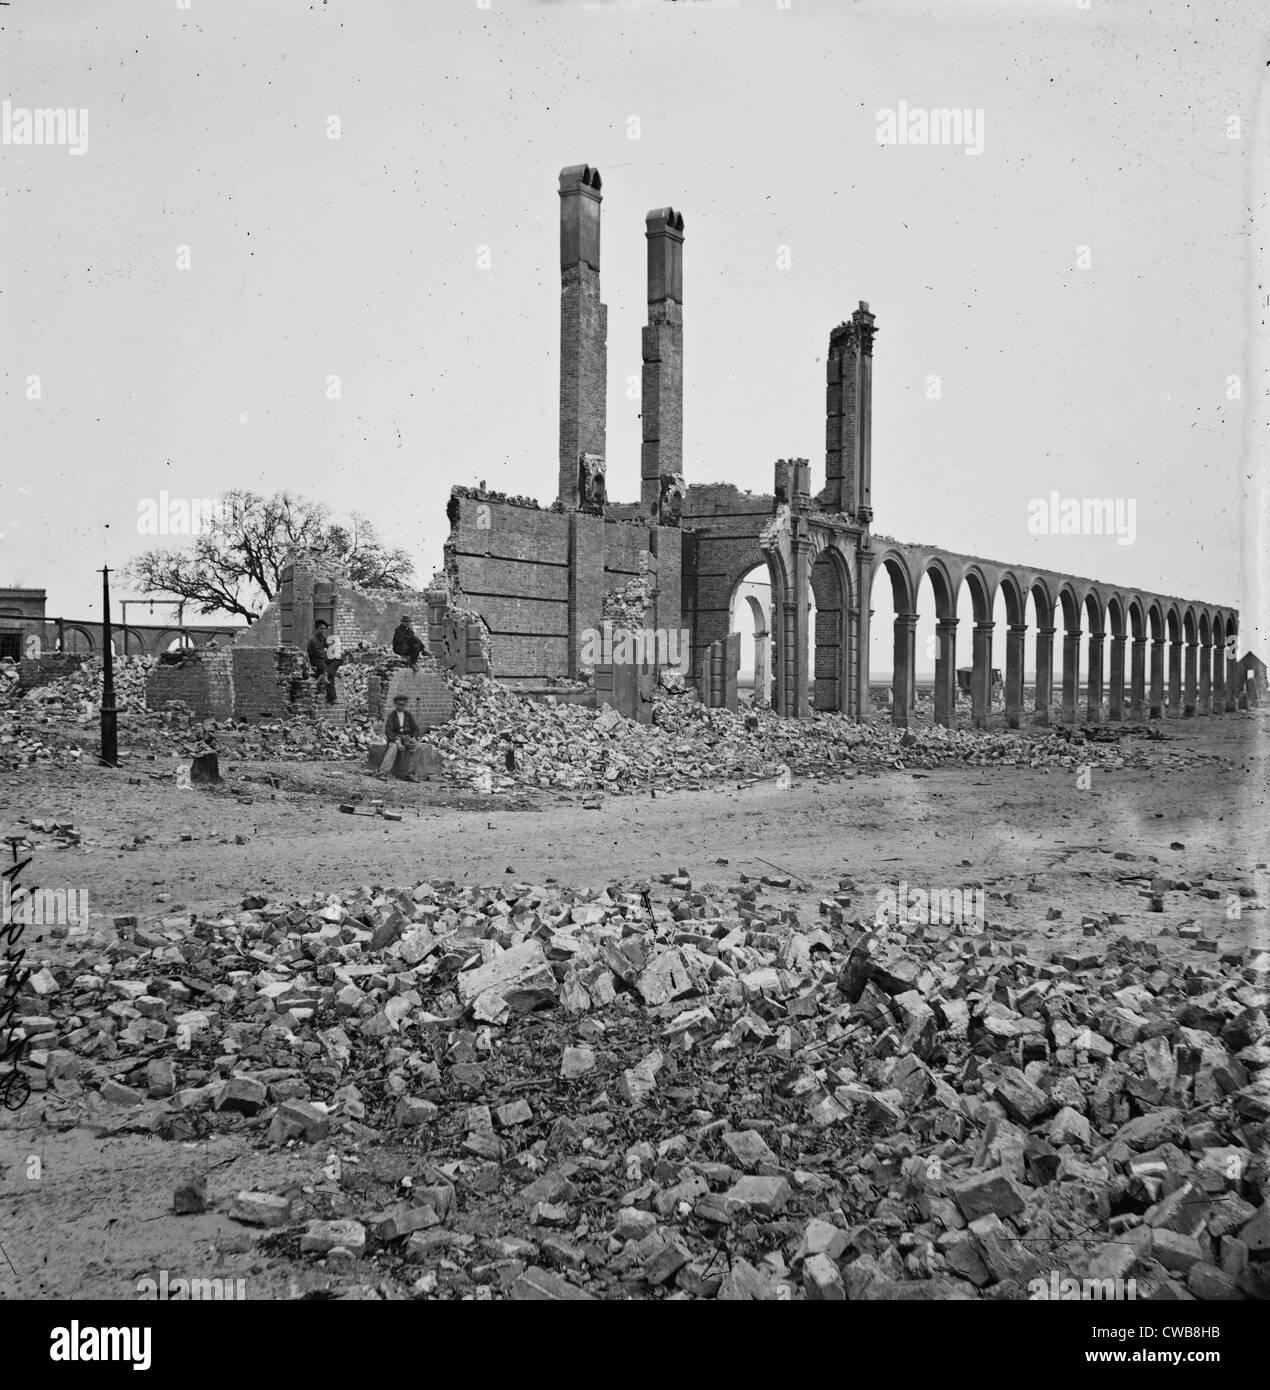 La guerre civile. Charleston, Caroline du Sud. Ruines de la North Eastern Railroad depot, 1865 Banque D'Images